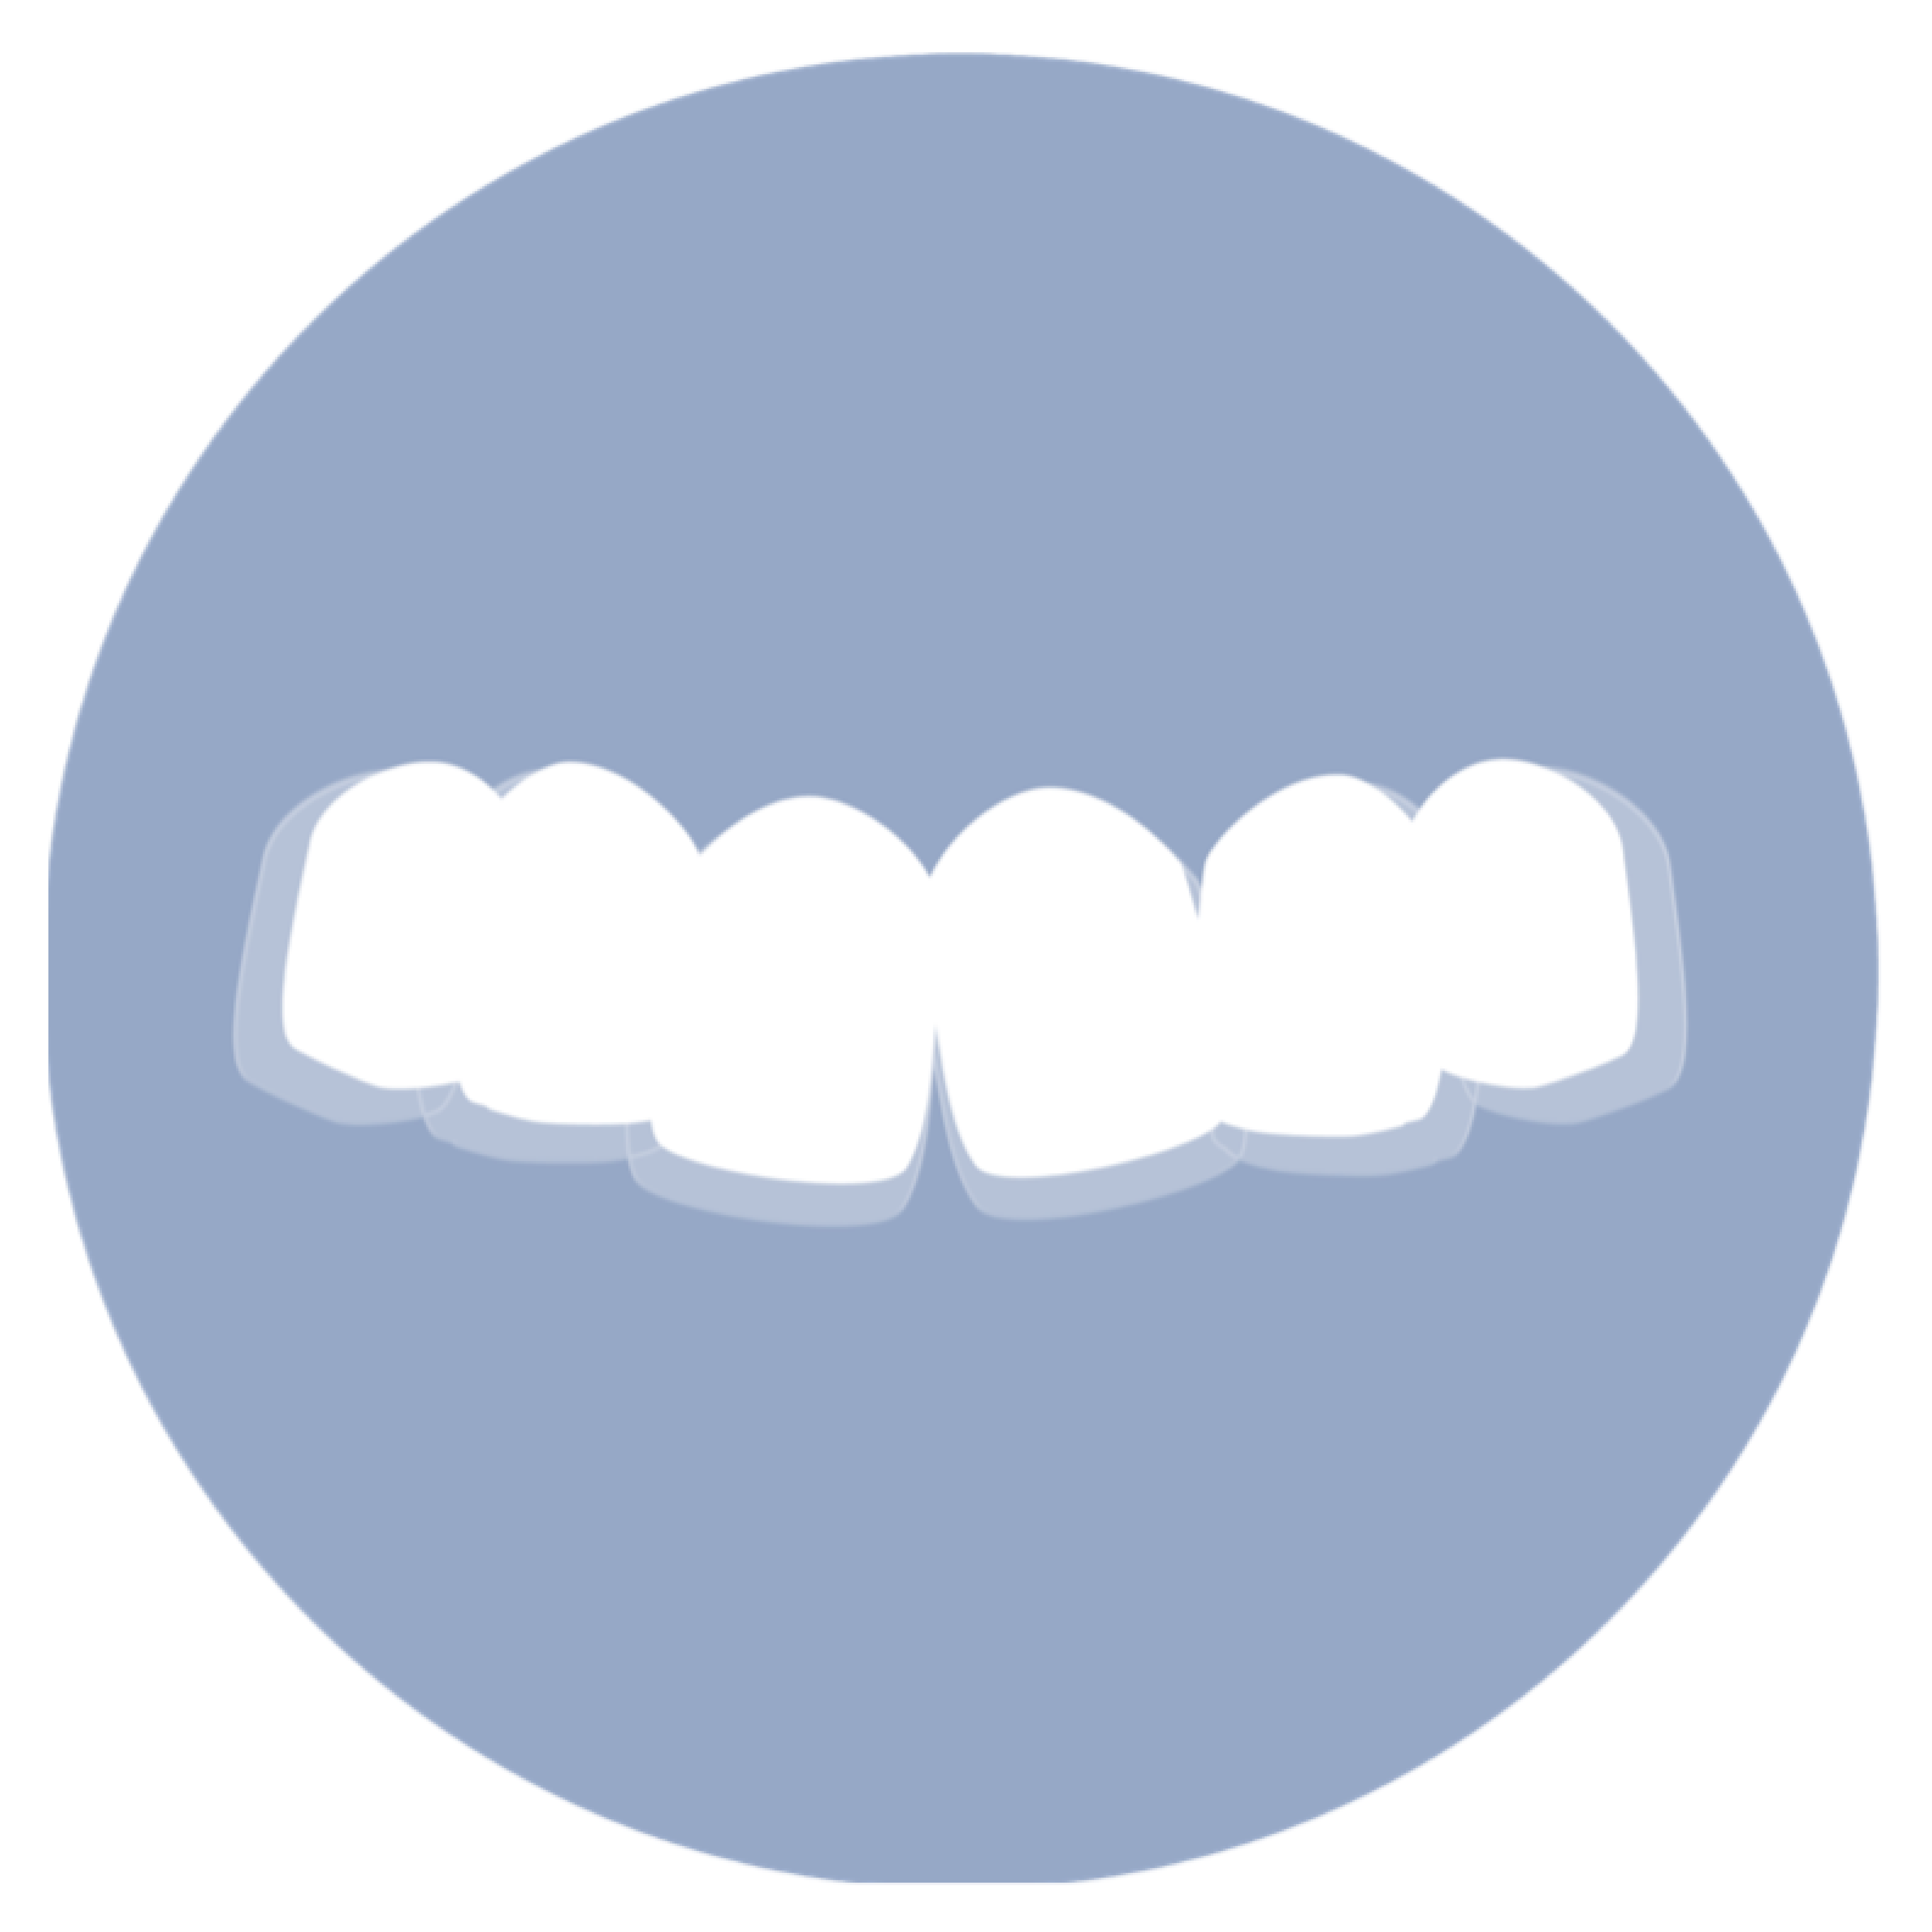 Crooked teeth with Invisalign illustration